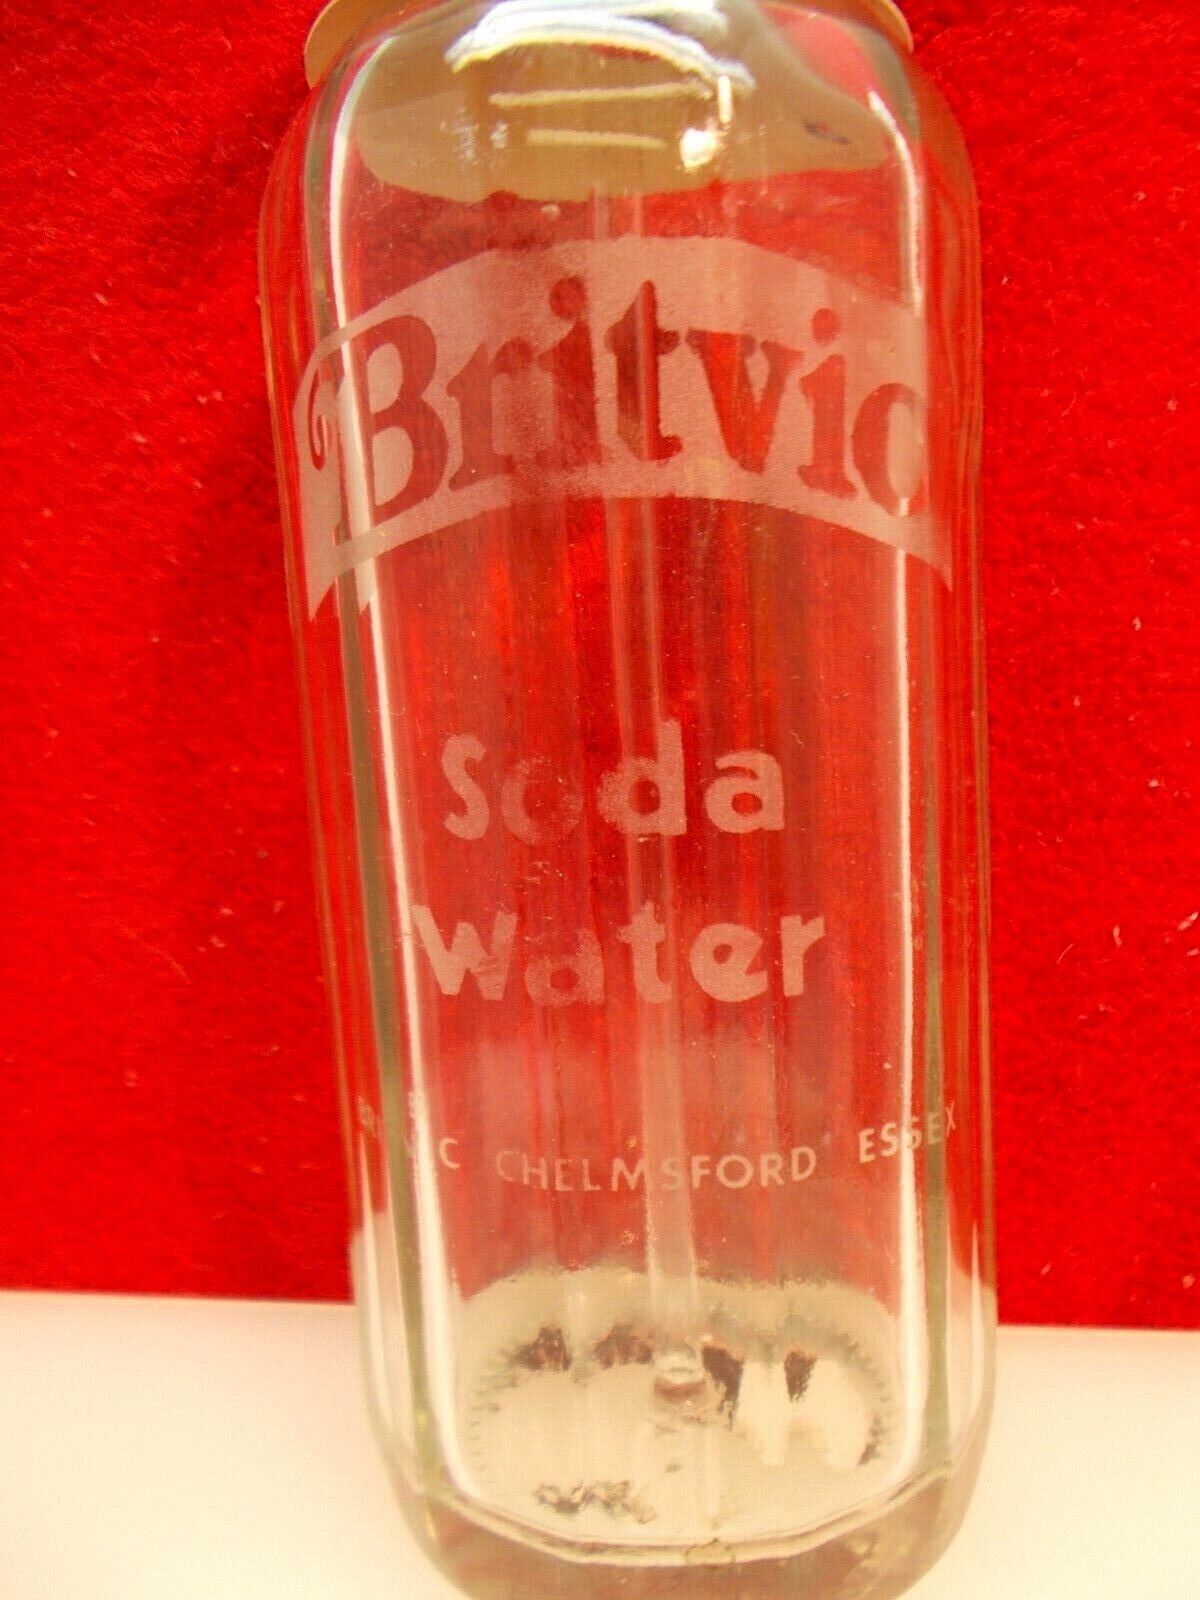 Adcock's Britvic Soda Water Bottle #2